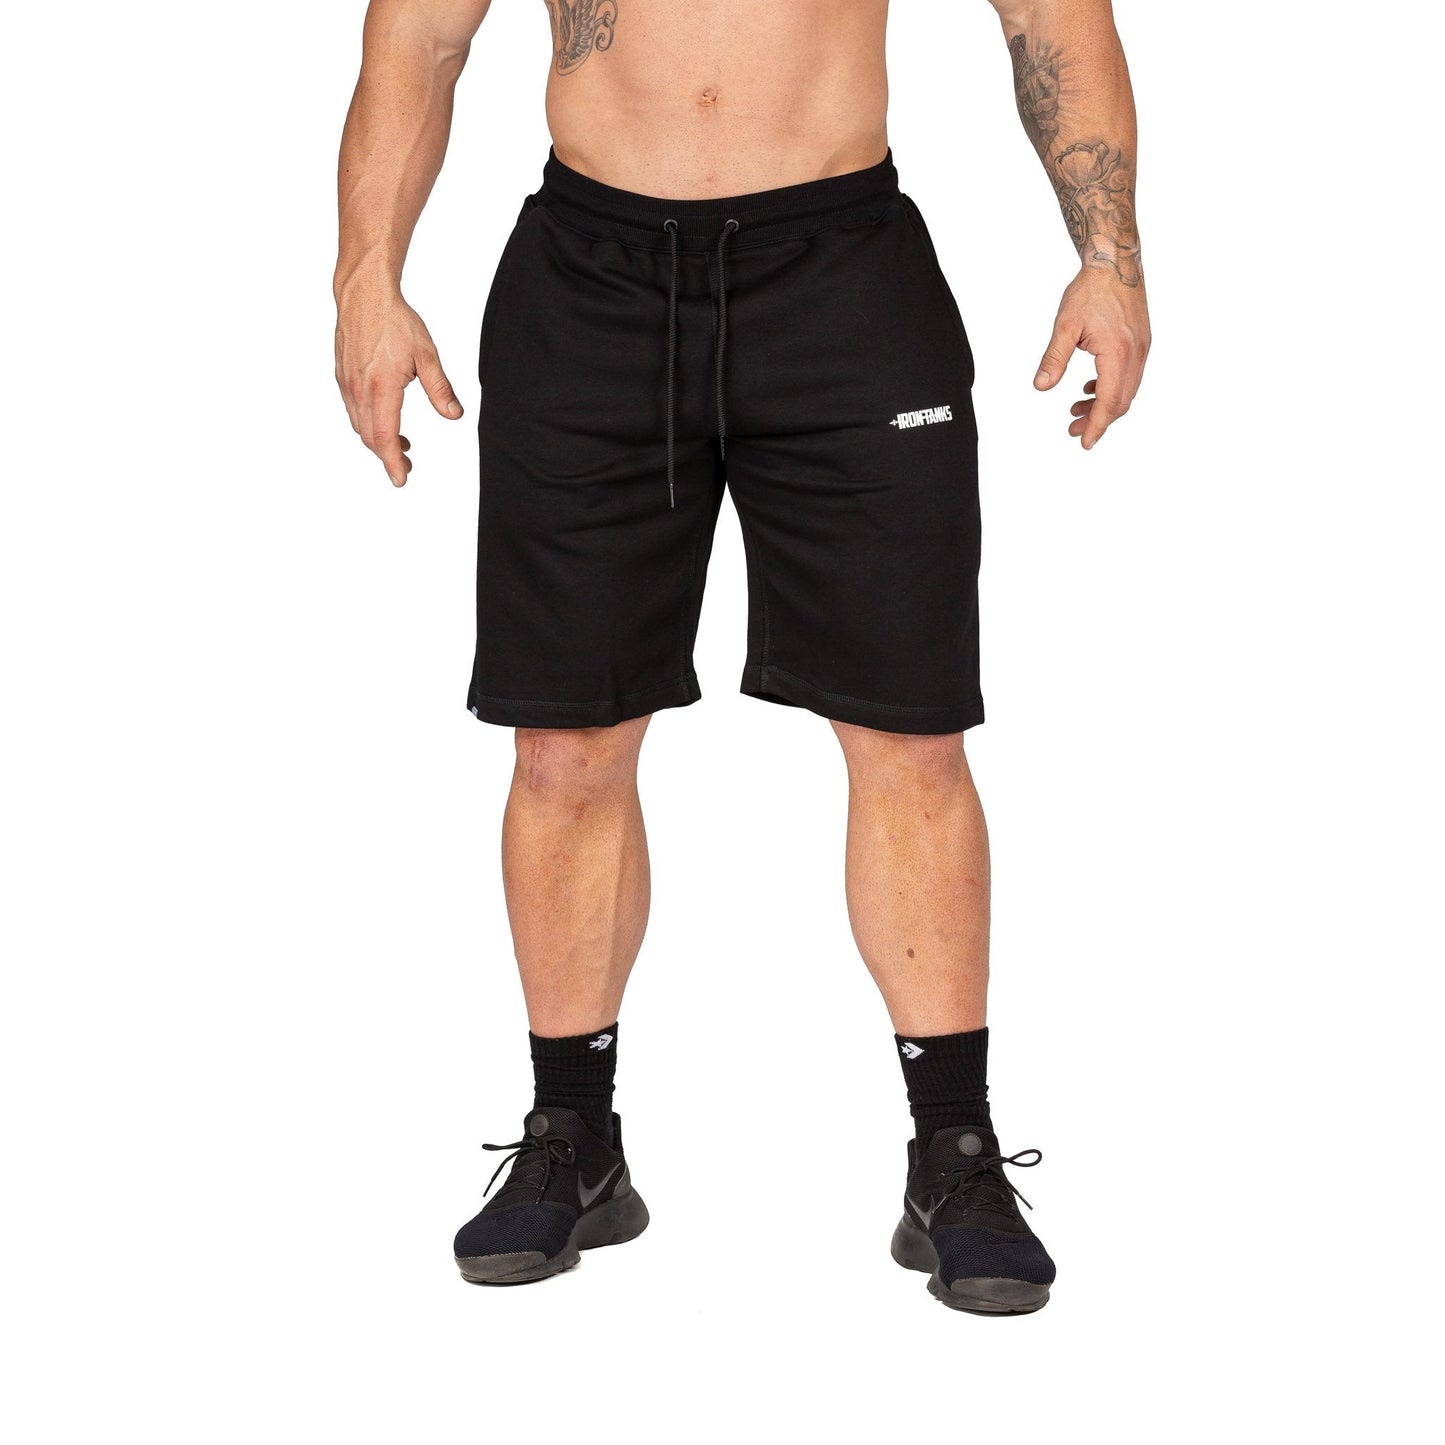 Iron Tanks Men's BFG Gym Shorts II (Flux Black)